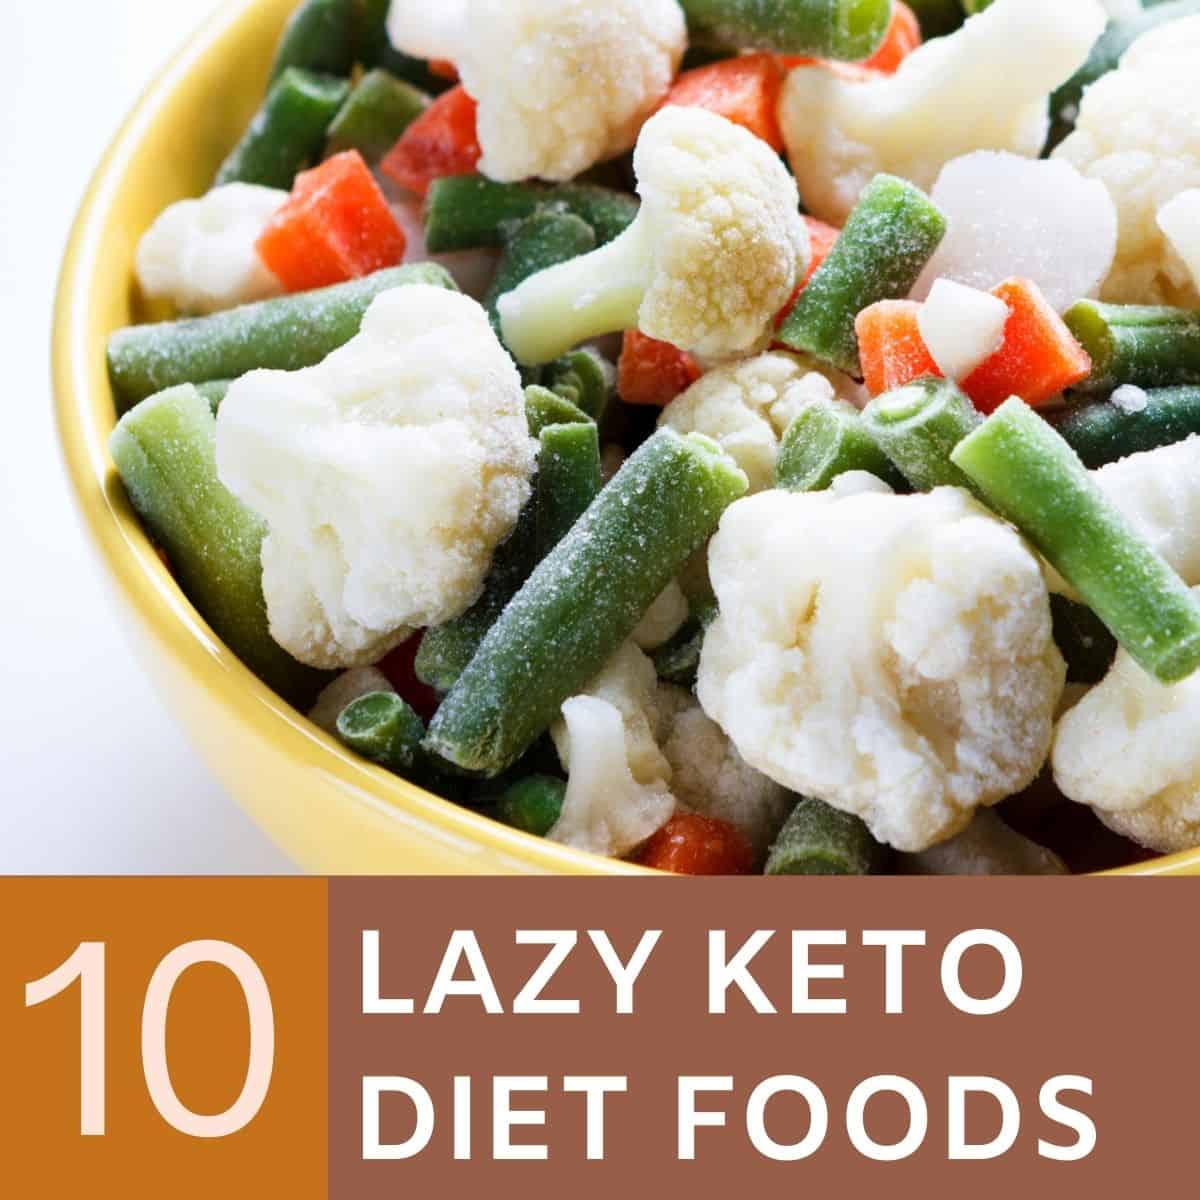 lazy keto diet foods